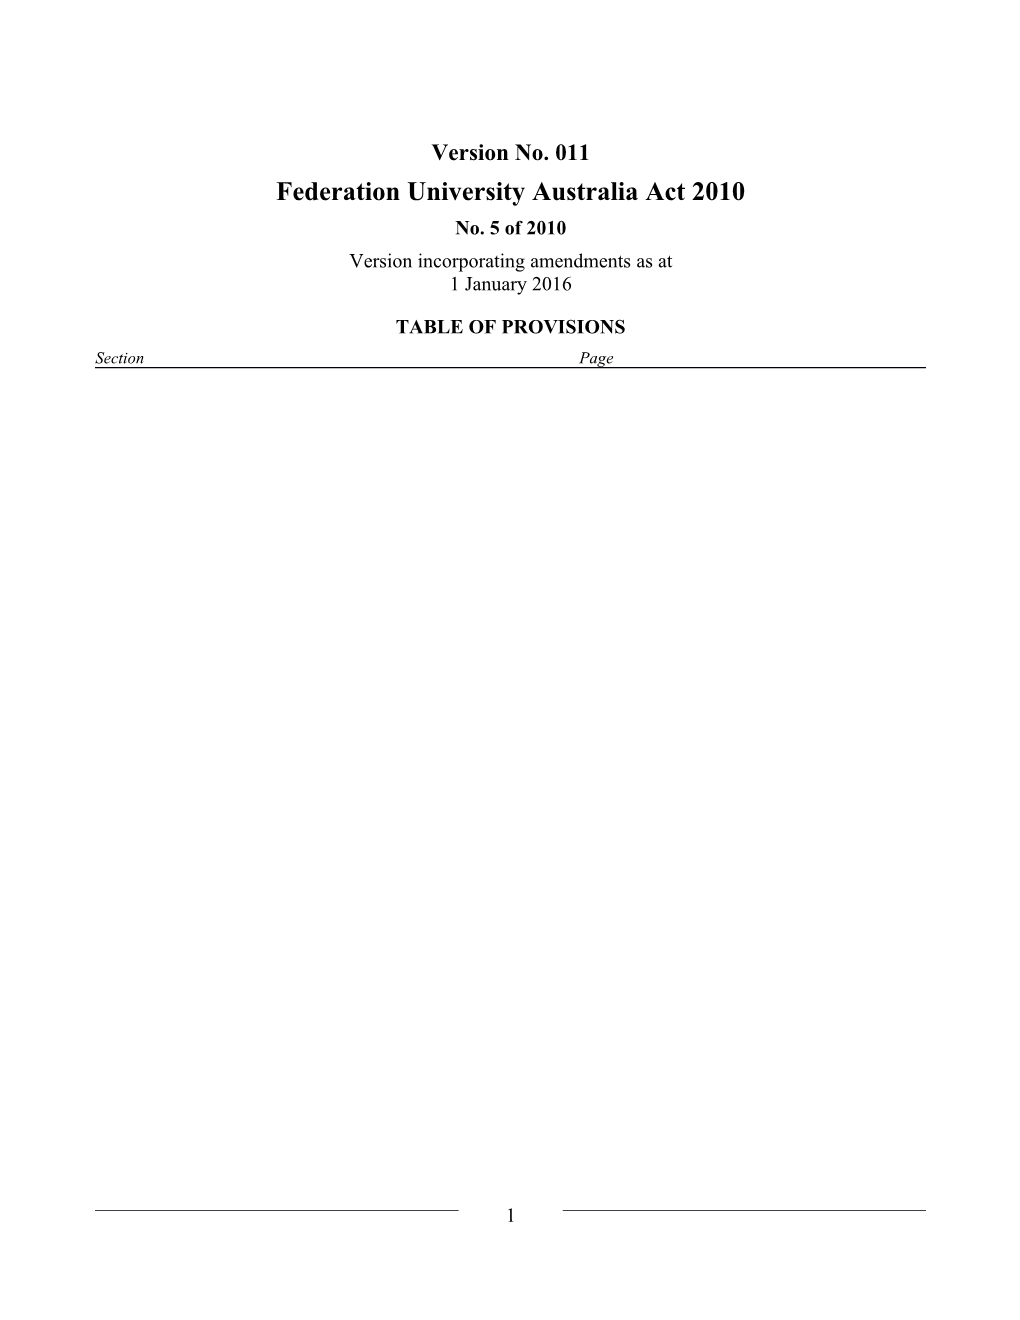 Federation University Australia Act 2010